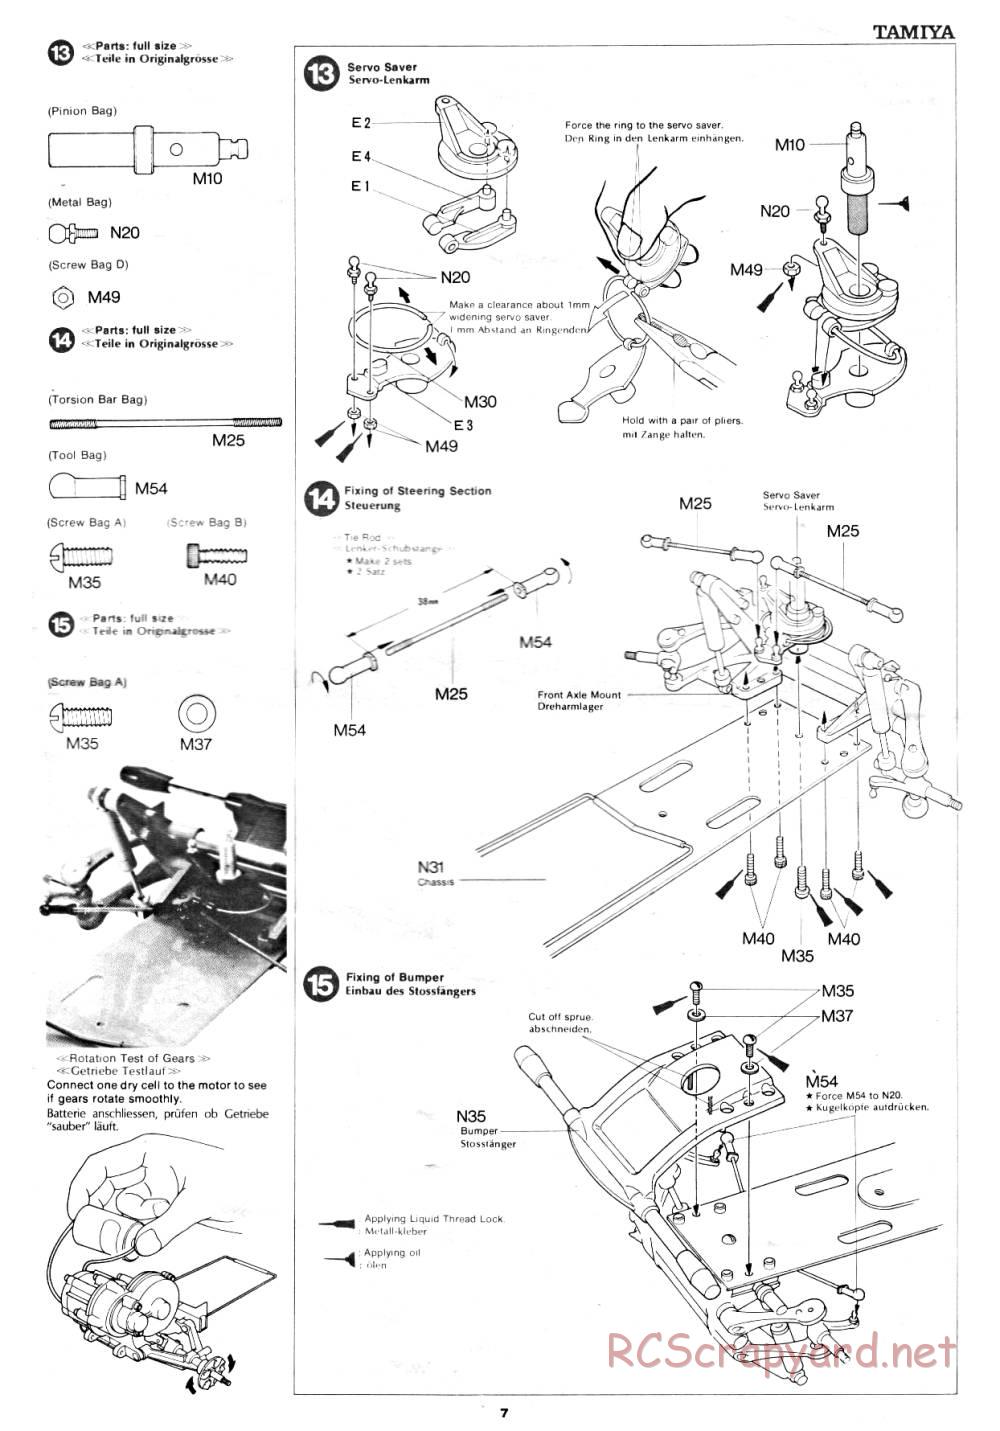 Tamiya - Sand Scorcher - 58016 - Manual - Page 7